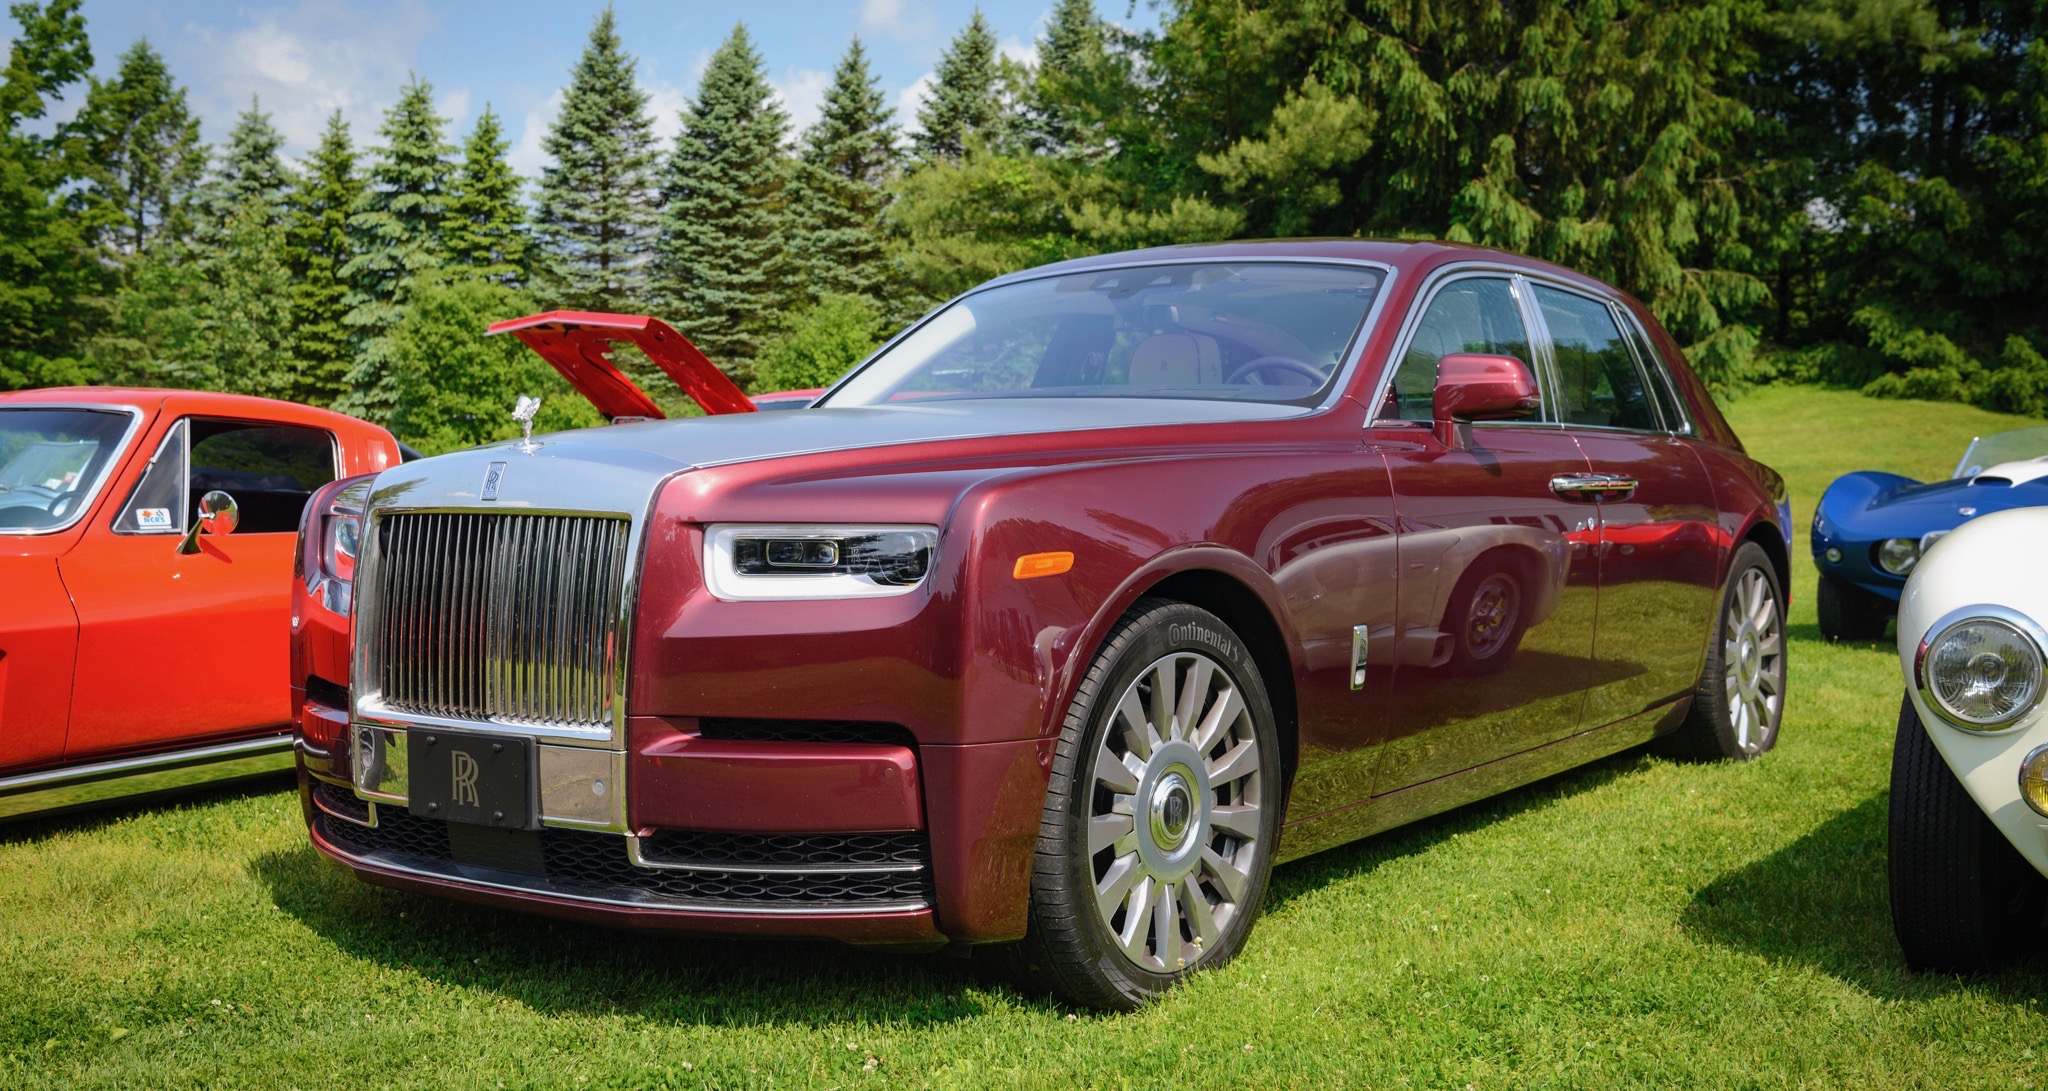 Rolls-Royce Phantom VIII, Driven: The finest motorcar in the world, ClassicCars.com Journal